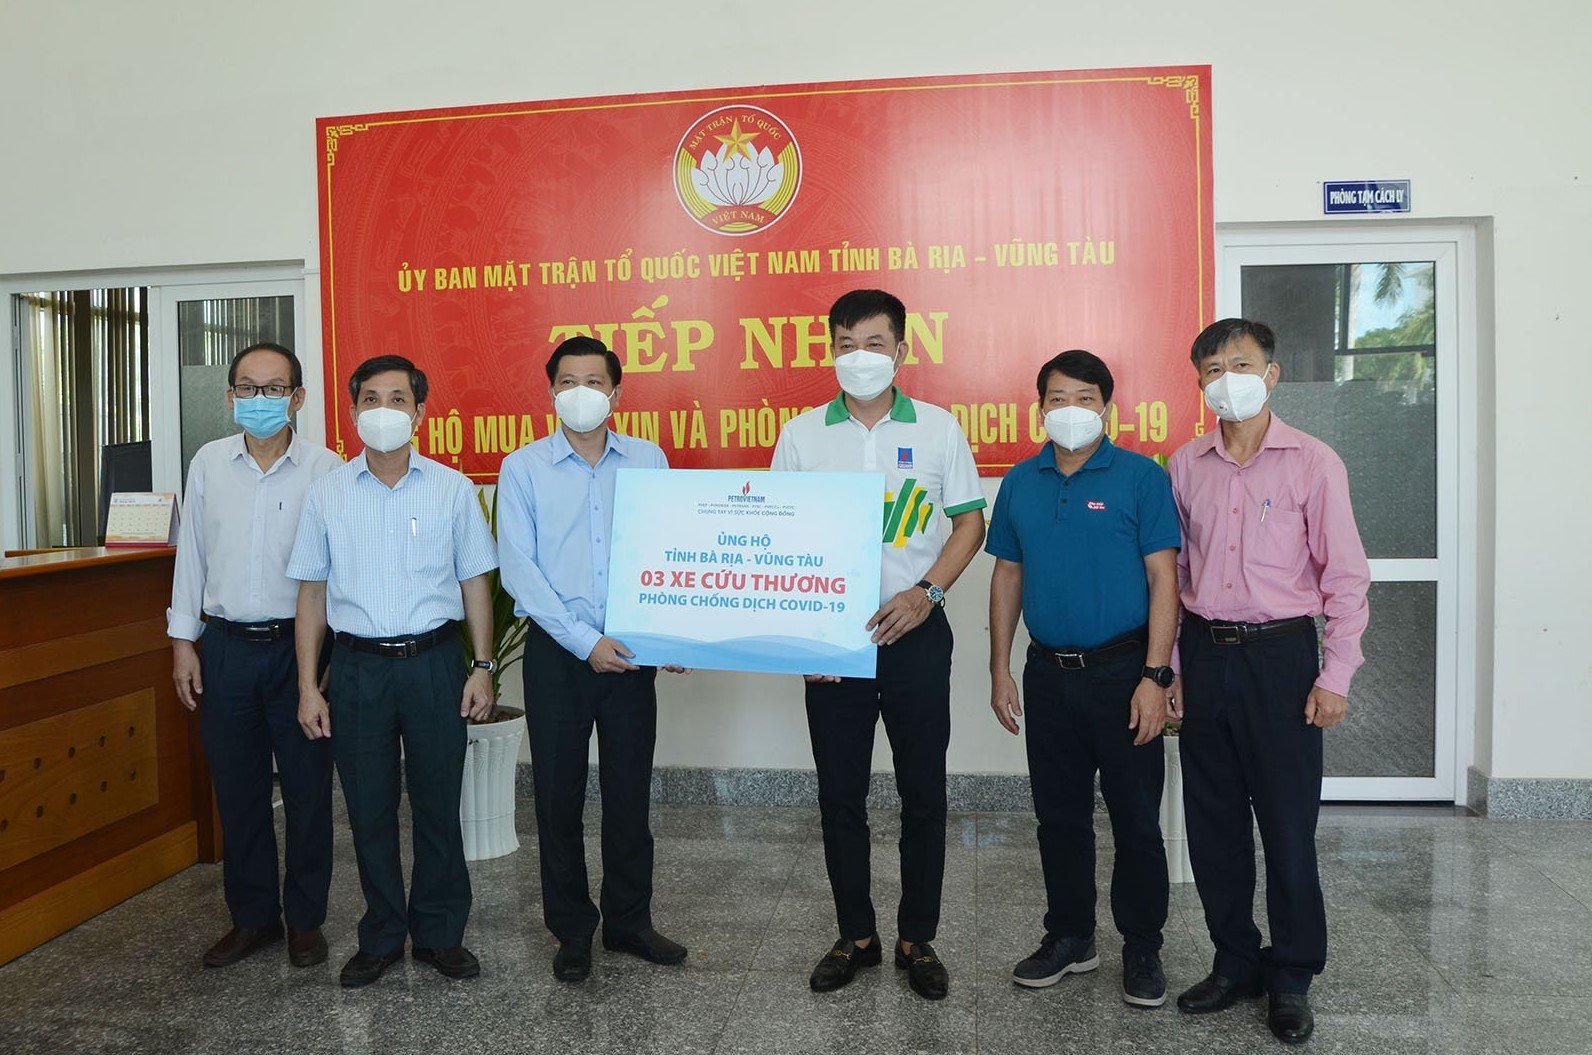 Petrovietnam donated 3 ambulances to Ba Ria Vung Tau province